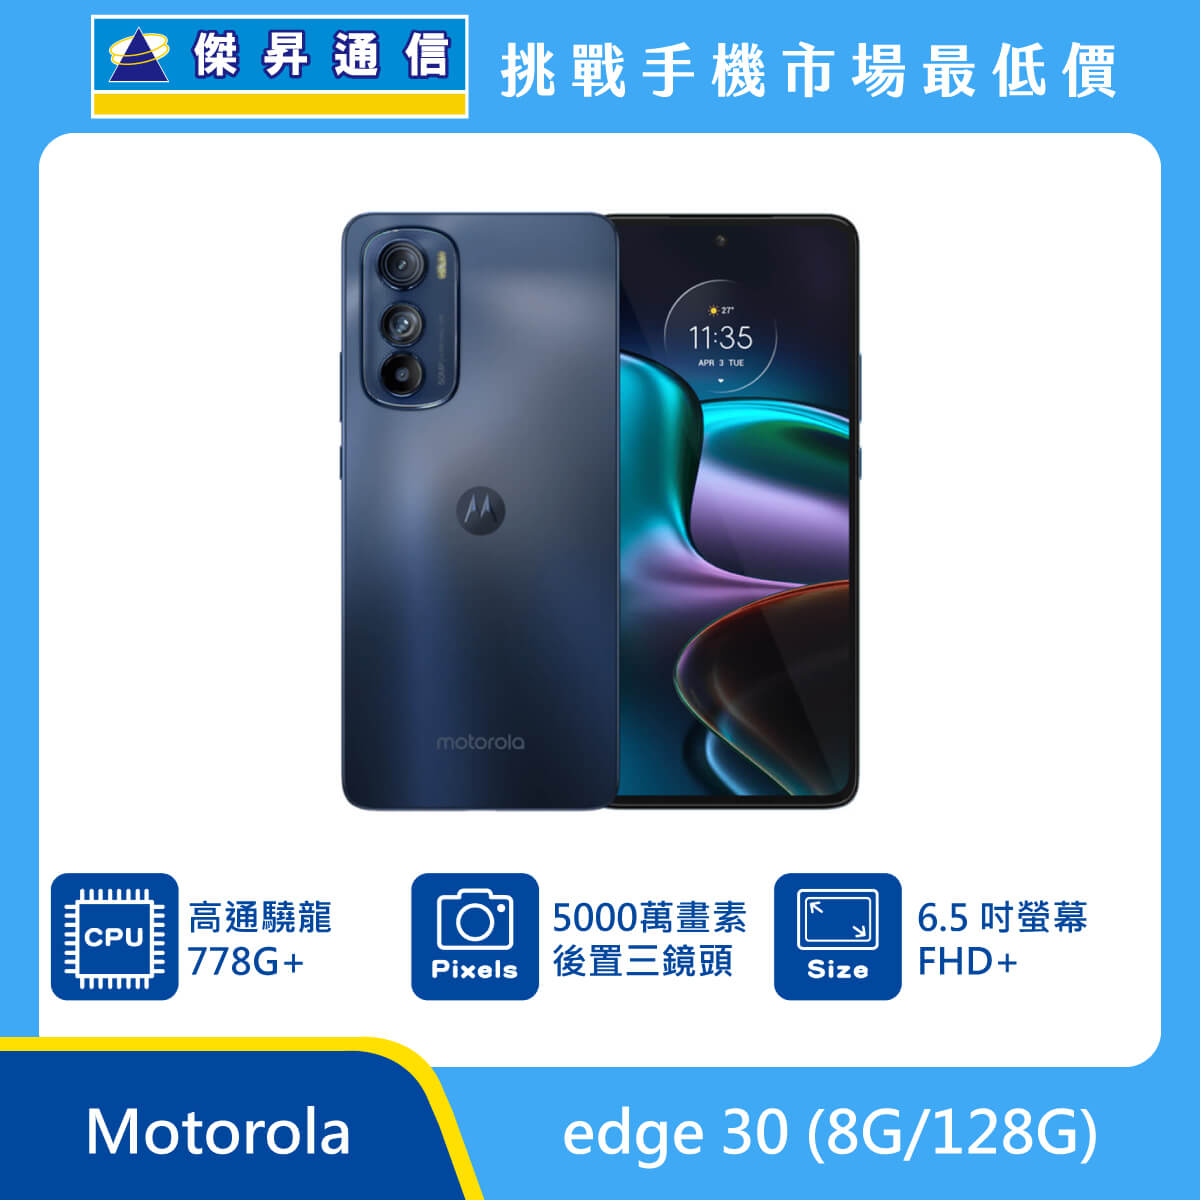 Motorola edge 30 (8G/128G)